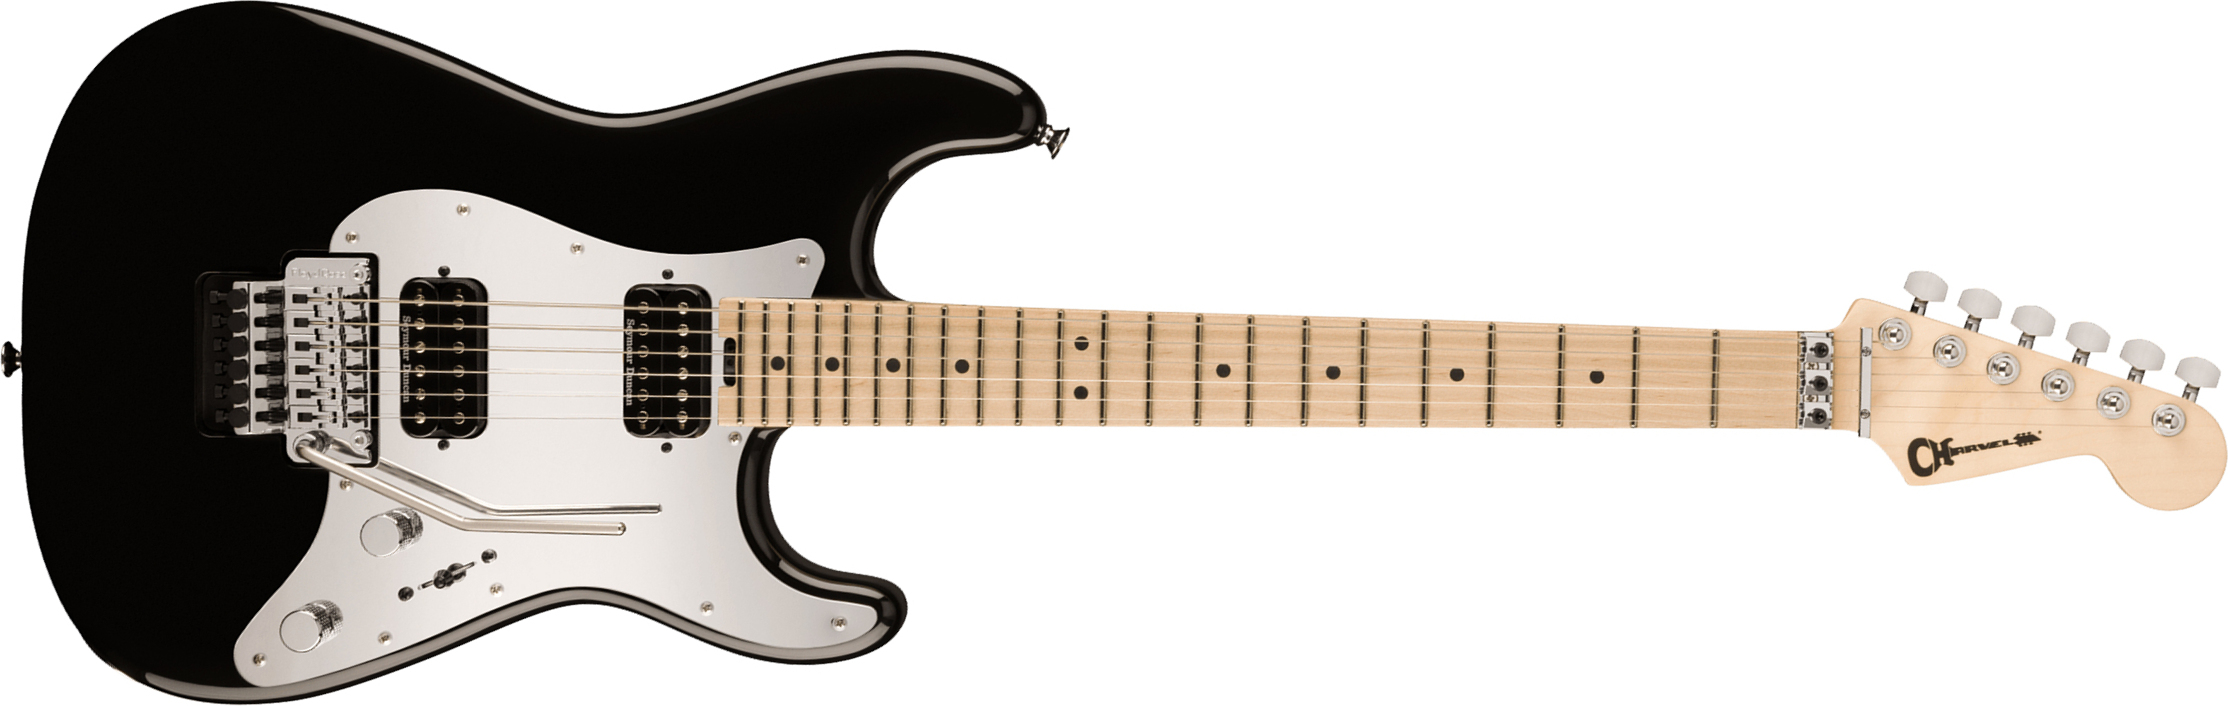 Charvel Pro-mod So-cal Style 1 Hh Fr M 2h Seymour Duncan Mn - Gloss Black - Str shape electric guitar - Main picture